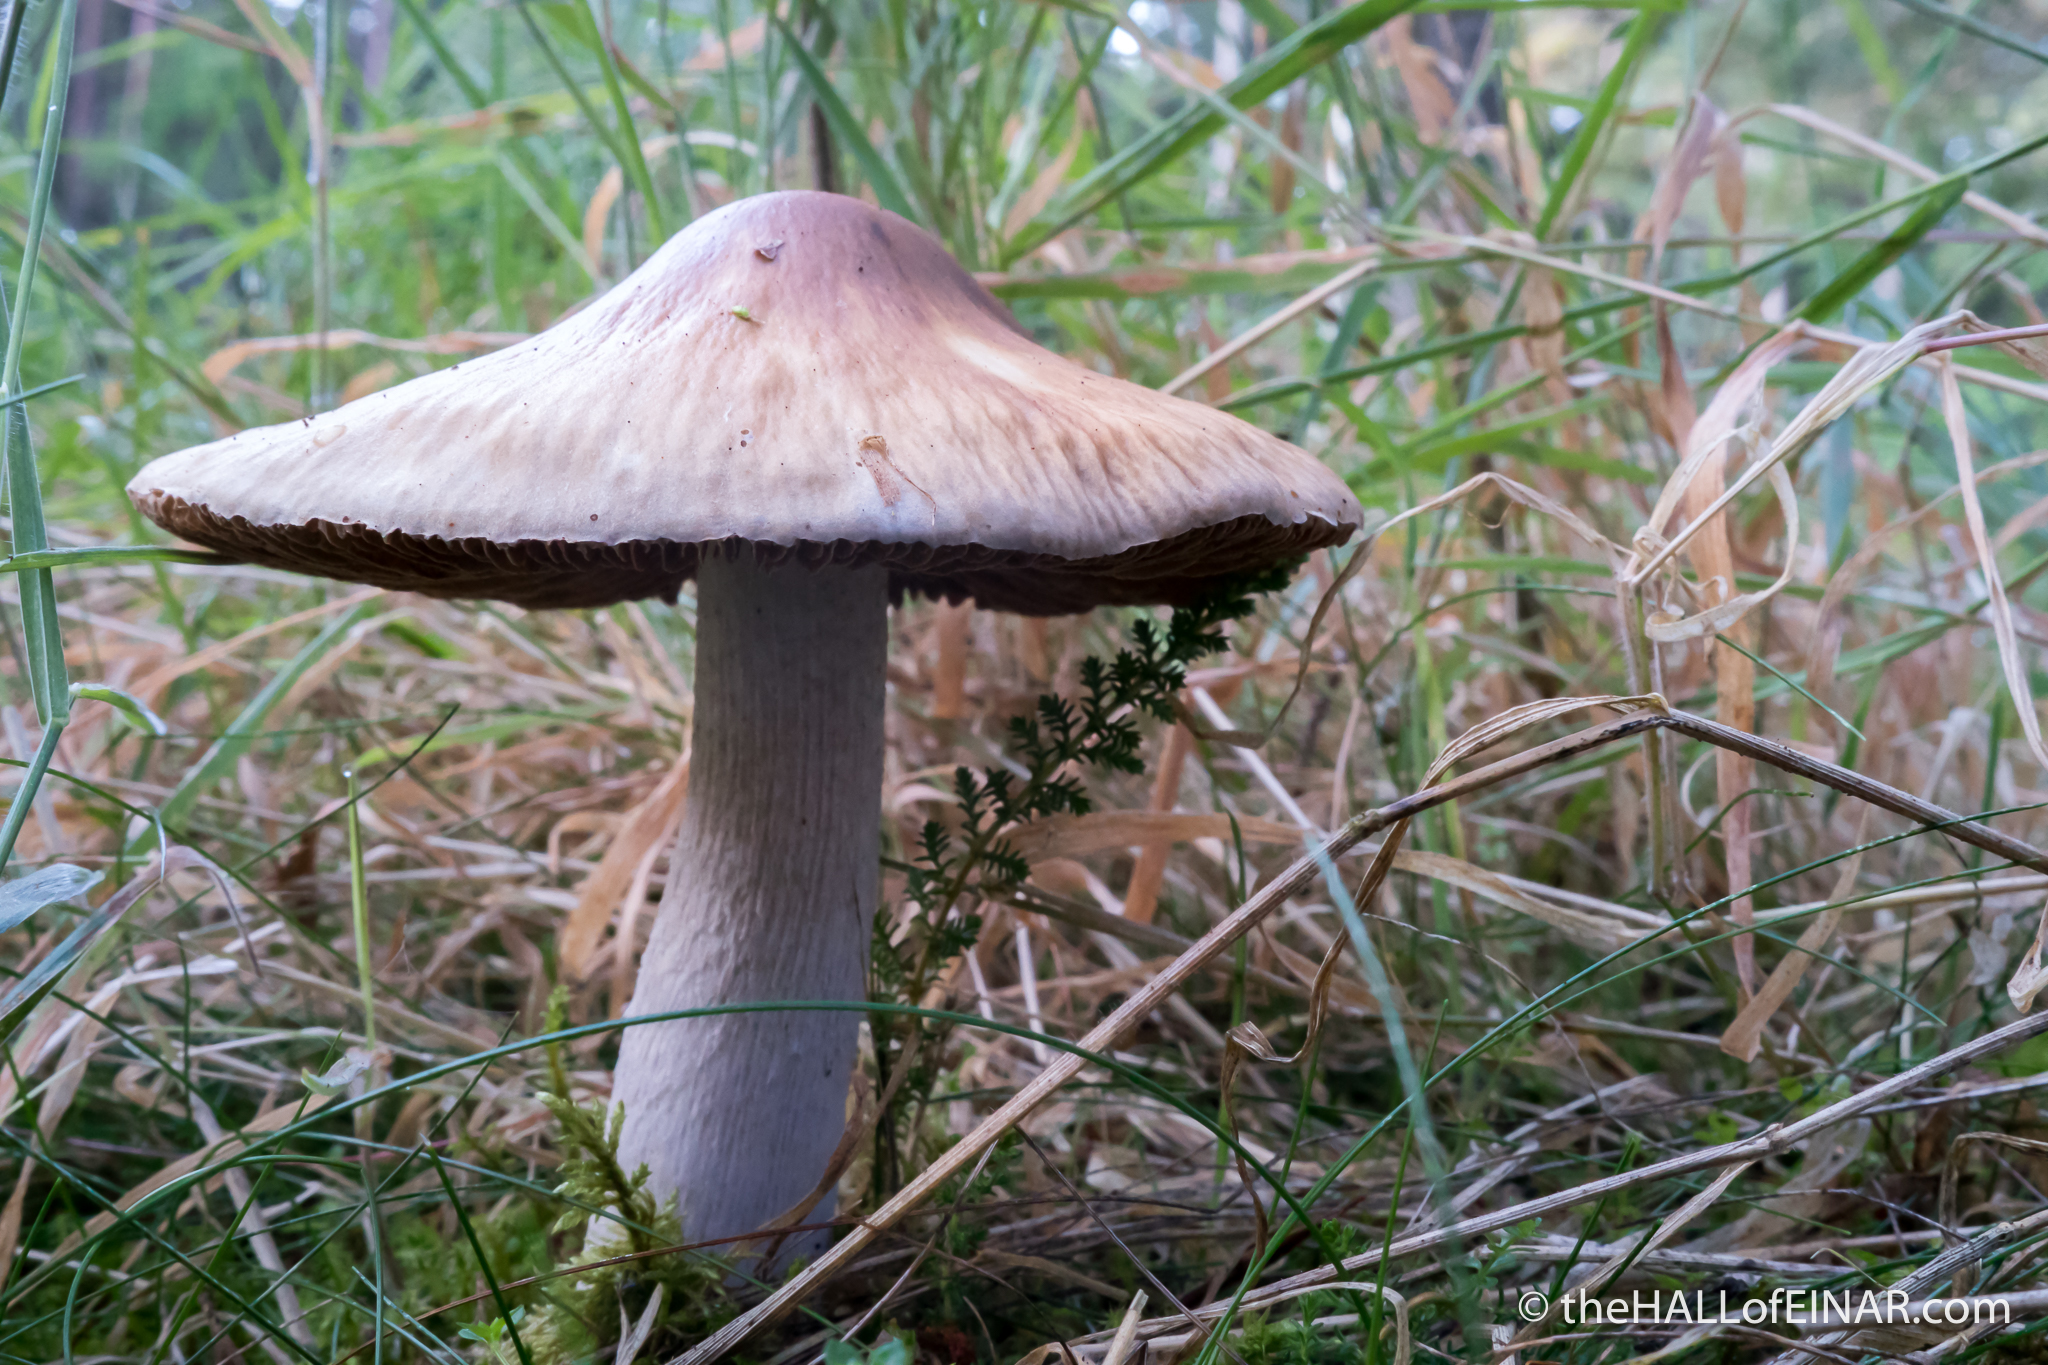 Fungi - The Hall of Einar - photograph (c) David Bailey (not the)